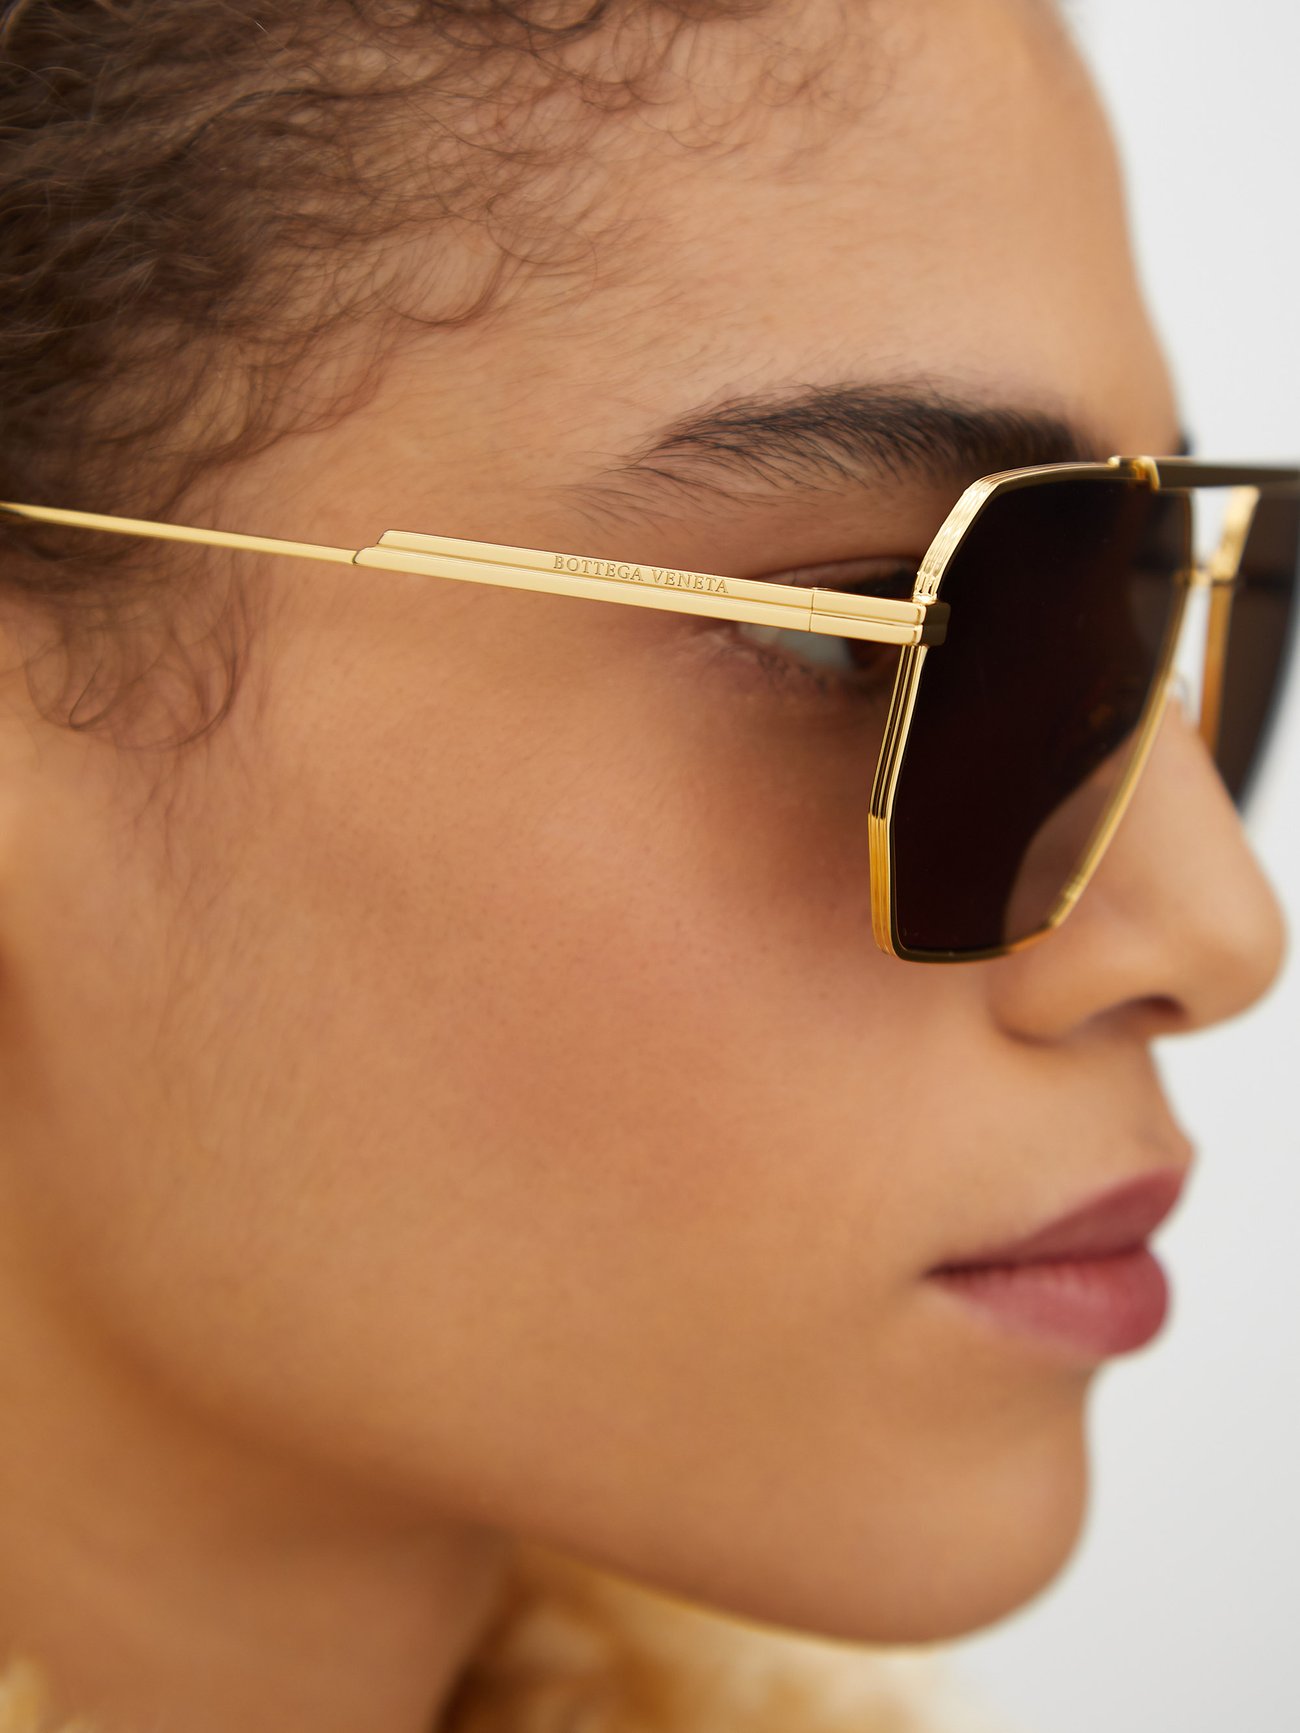 Bottega Veneta® Bond Metal Aviator Sunglasses in Gold. Shop online now.